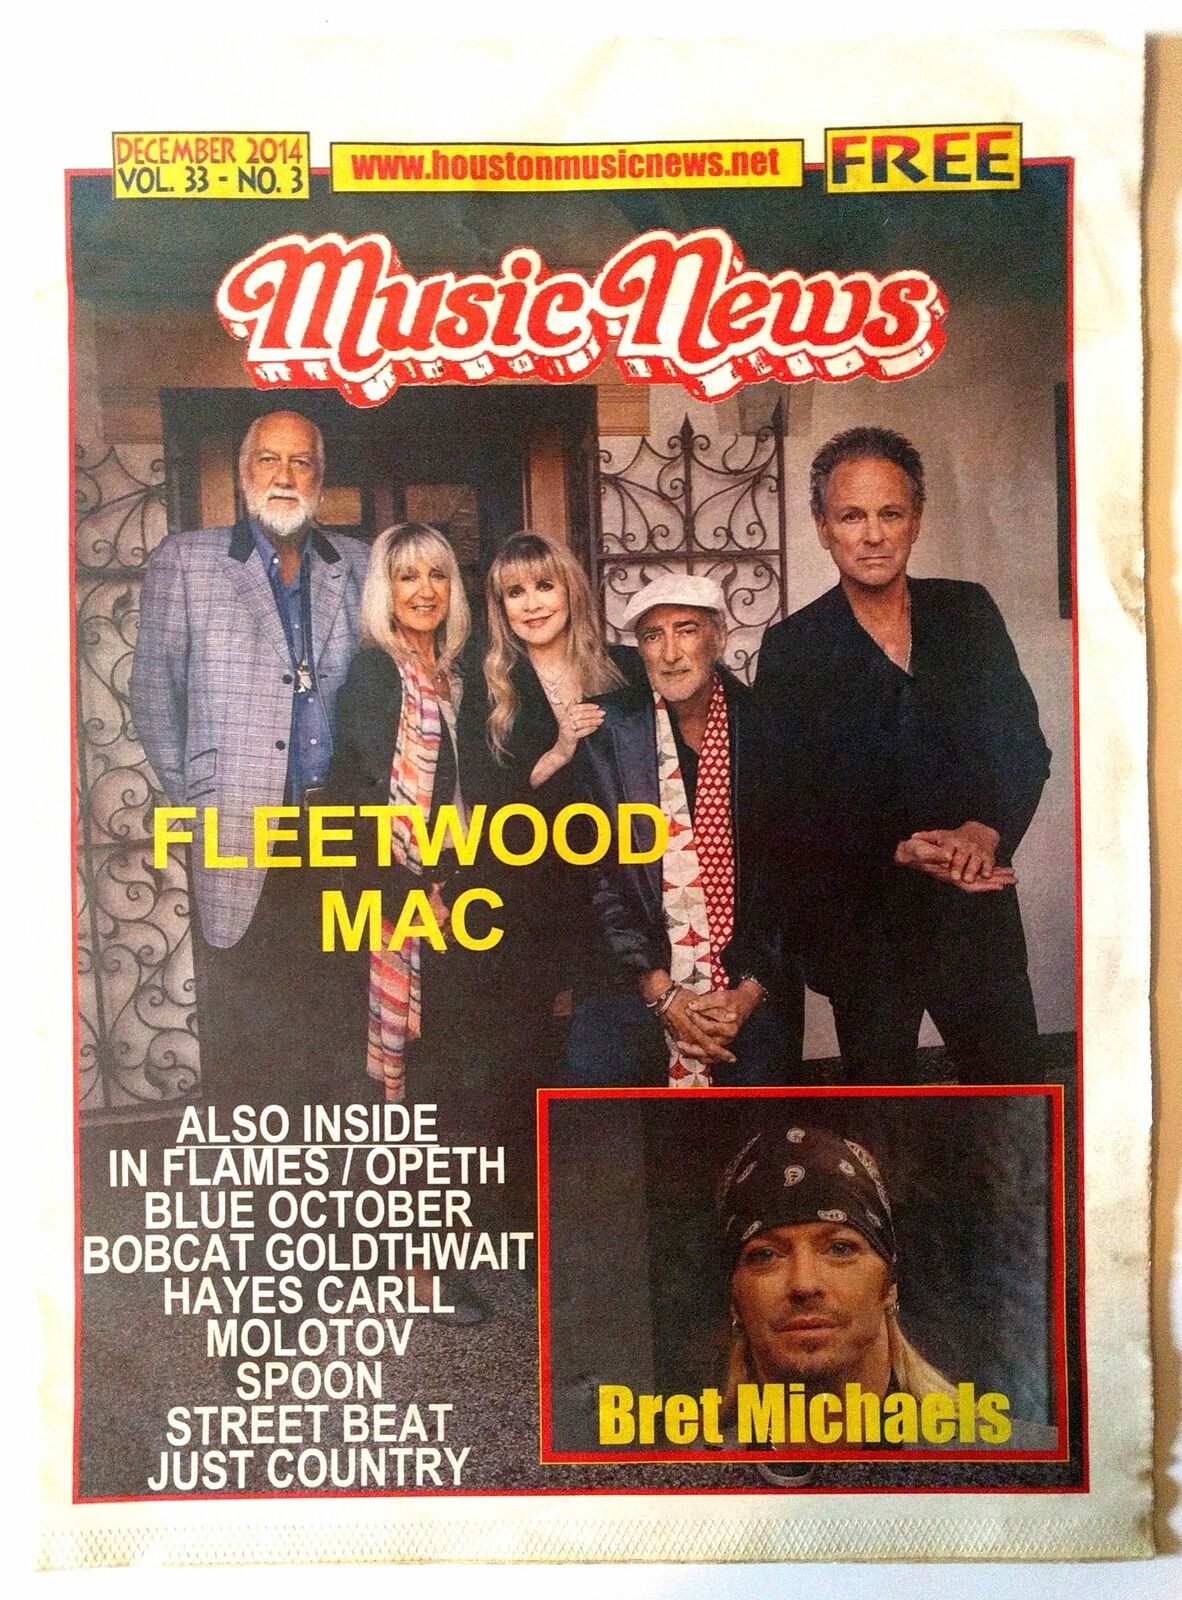 Cool Fleetwood Mac 2014 Music News Local Magazine!